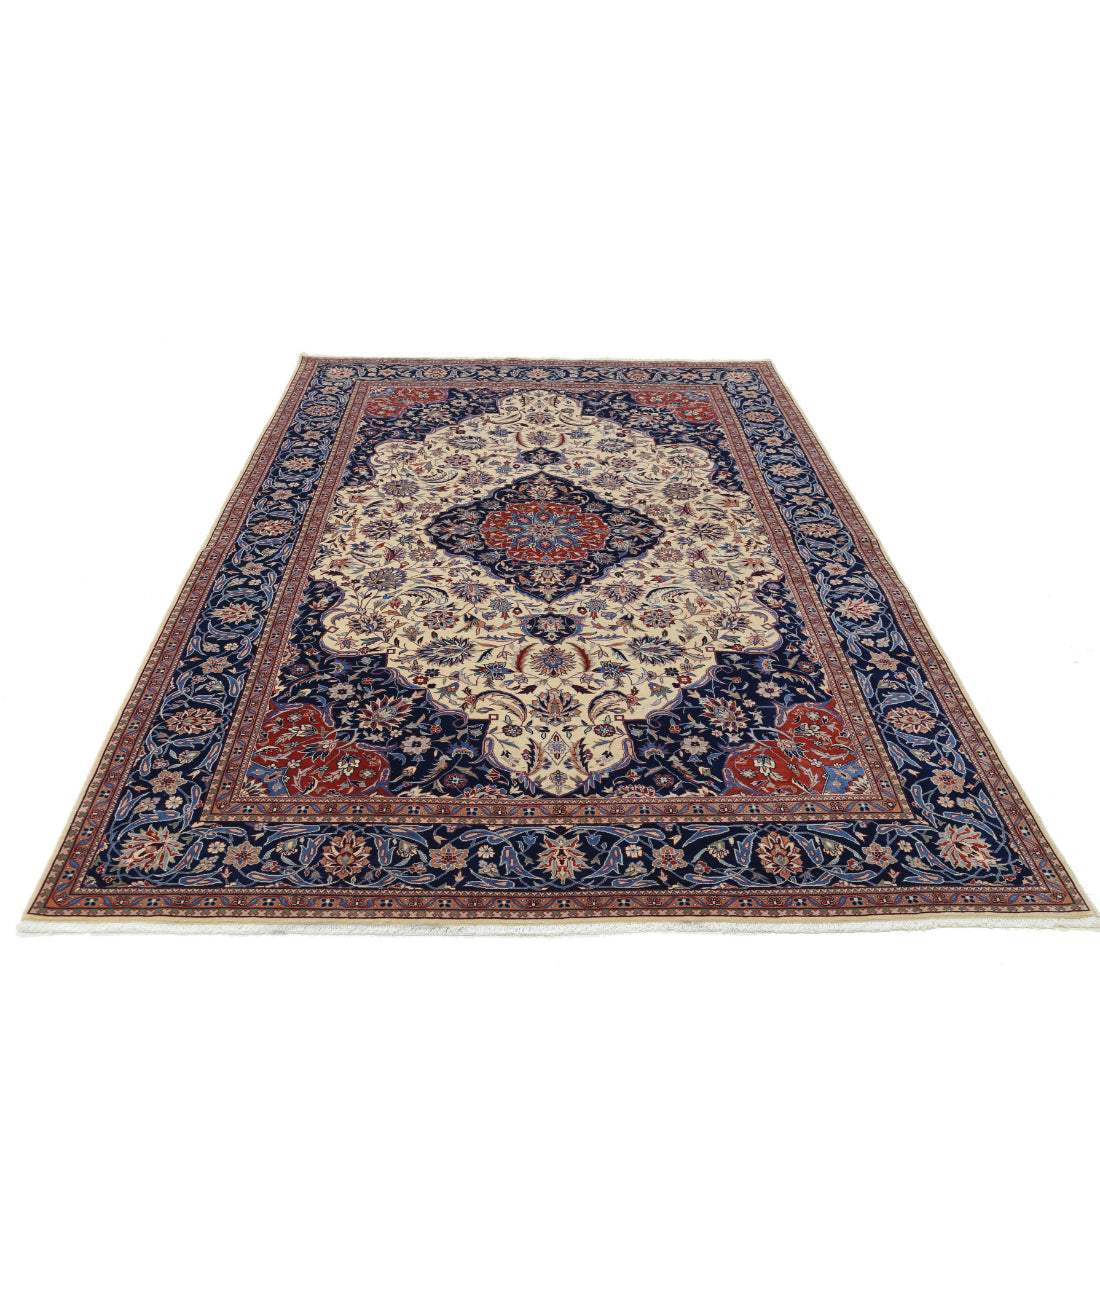 Heritage-hand-knotted-pak-persian-fine-wool-rug-5016577-3.jpg